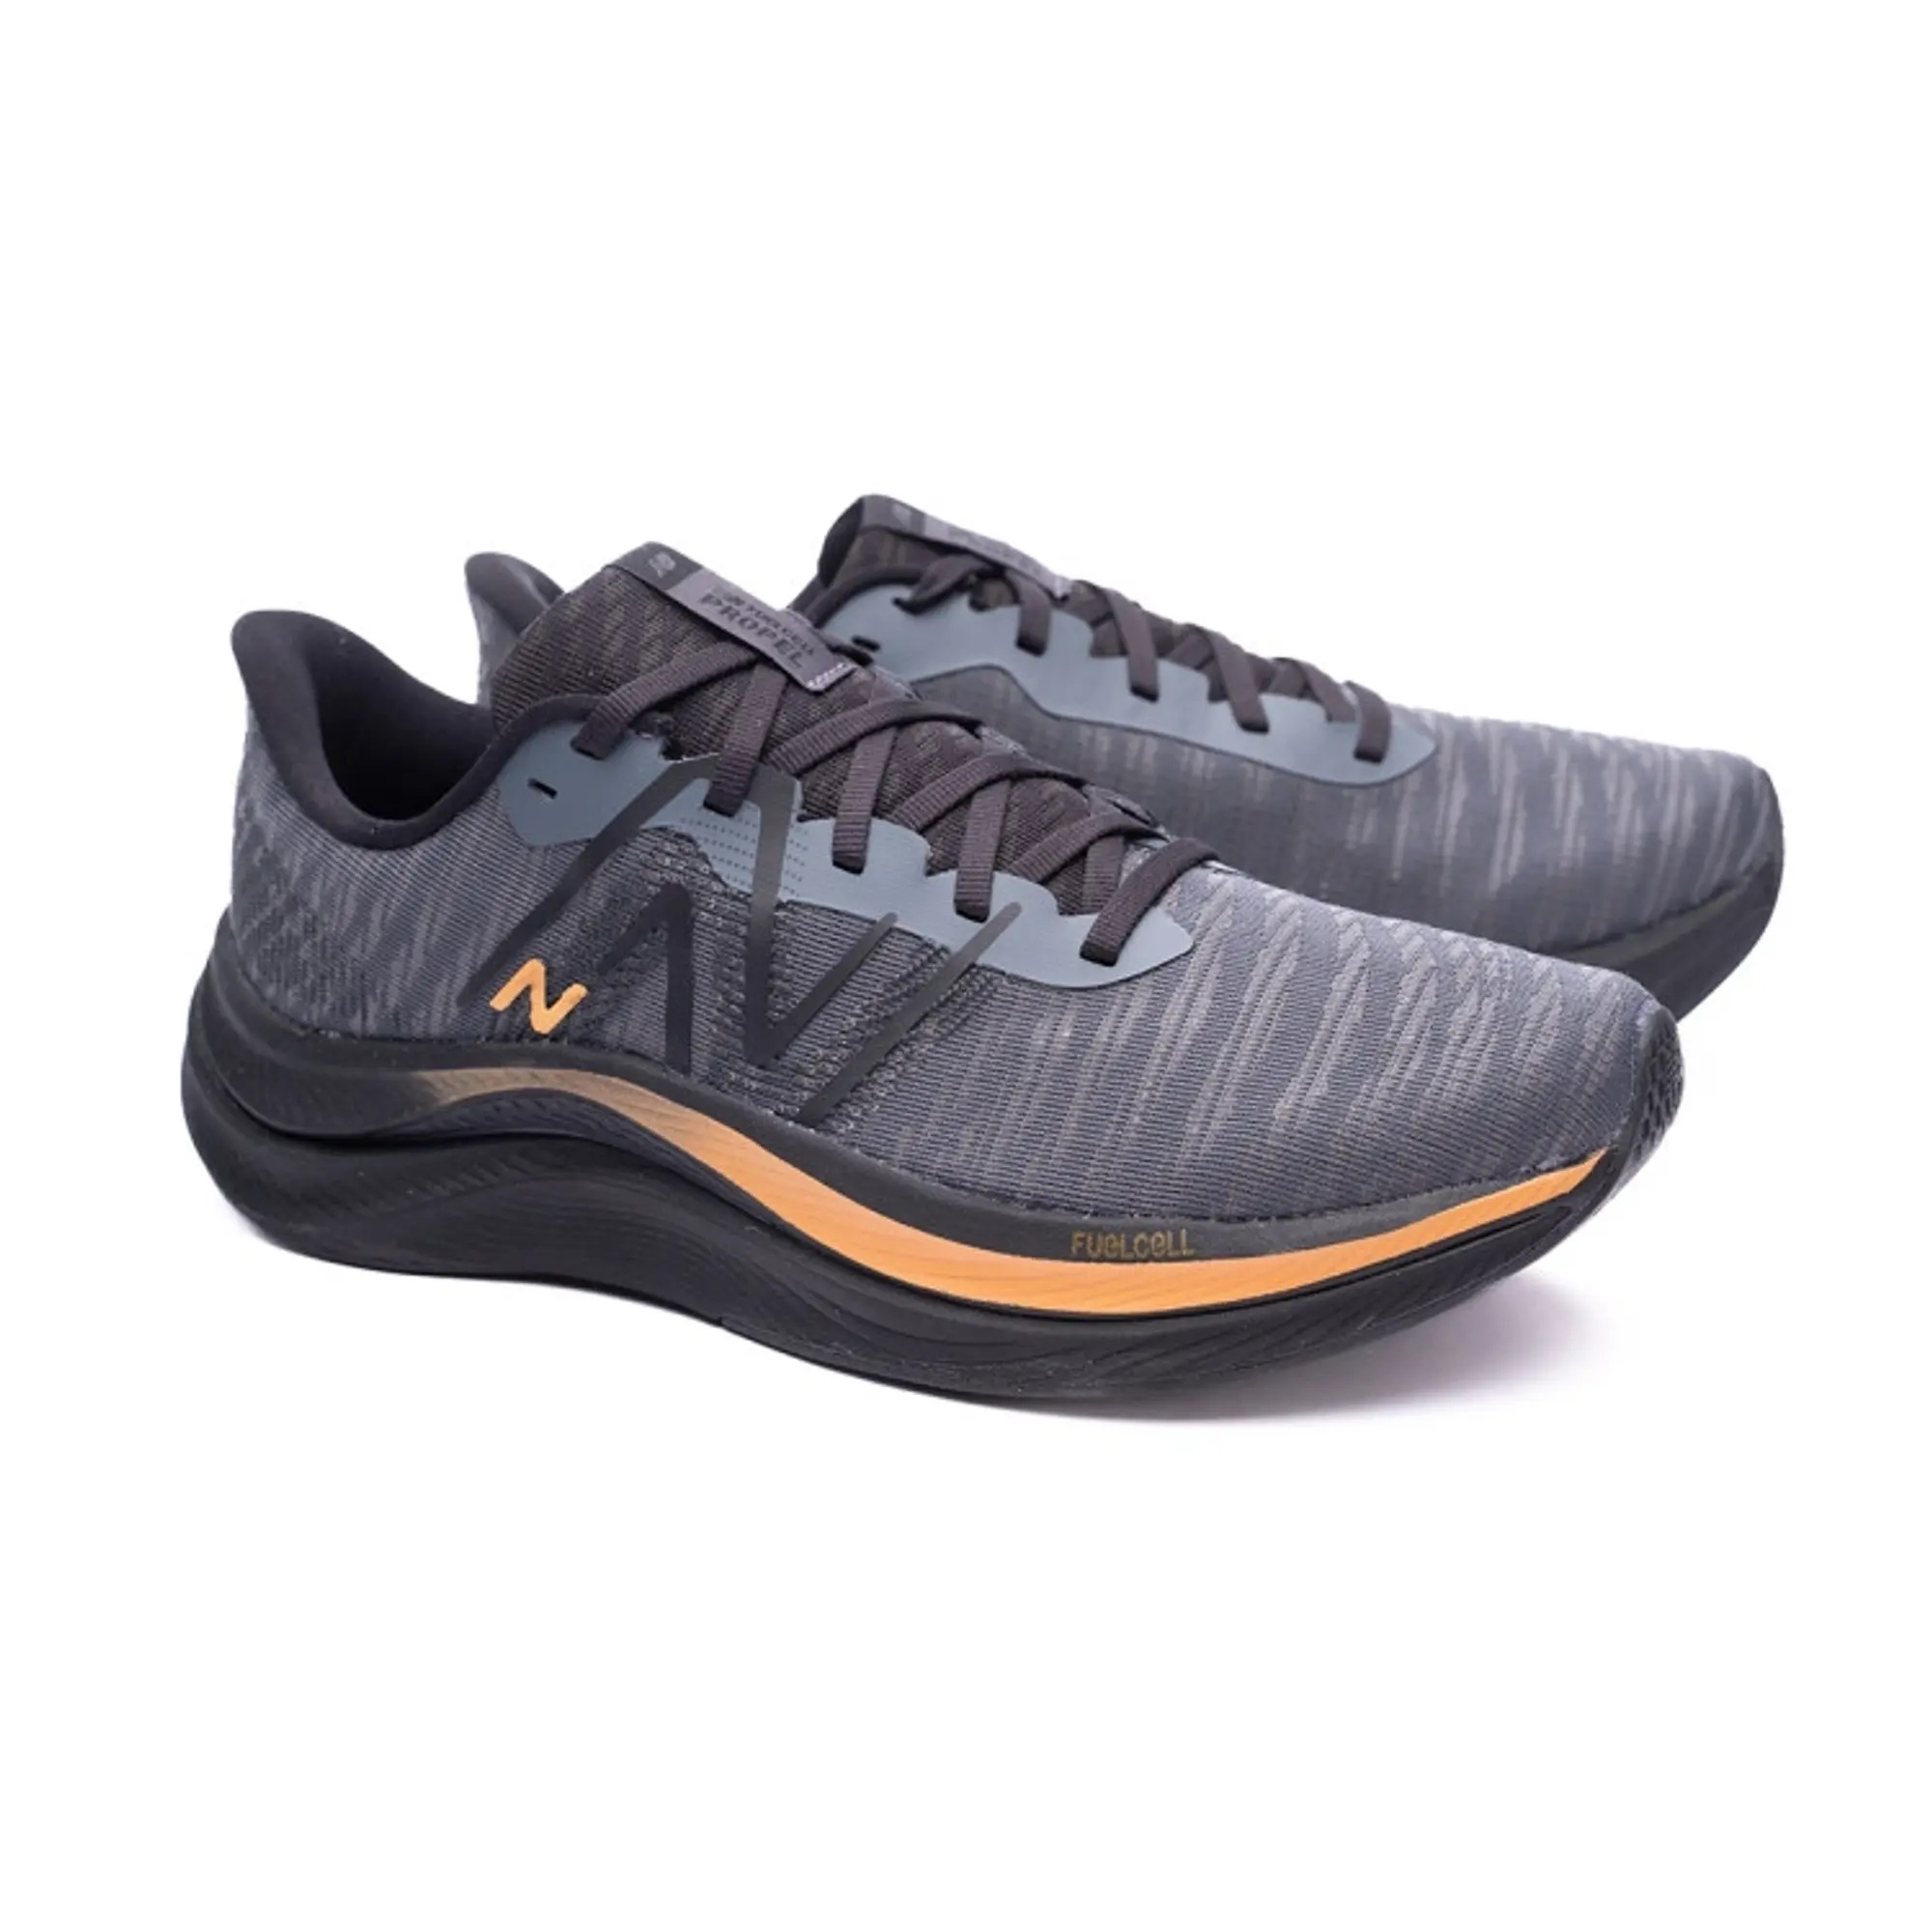 New Balance Running Shoe Fuelcell Propel V4 - Grey